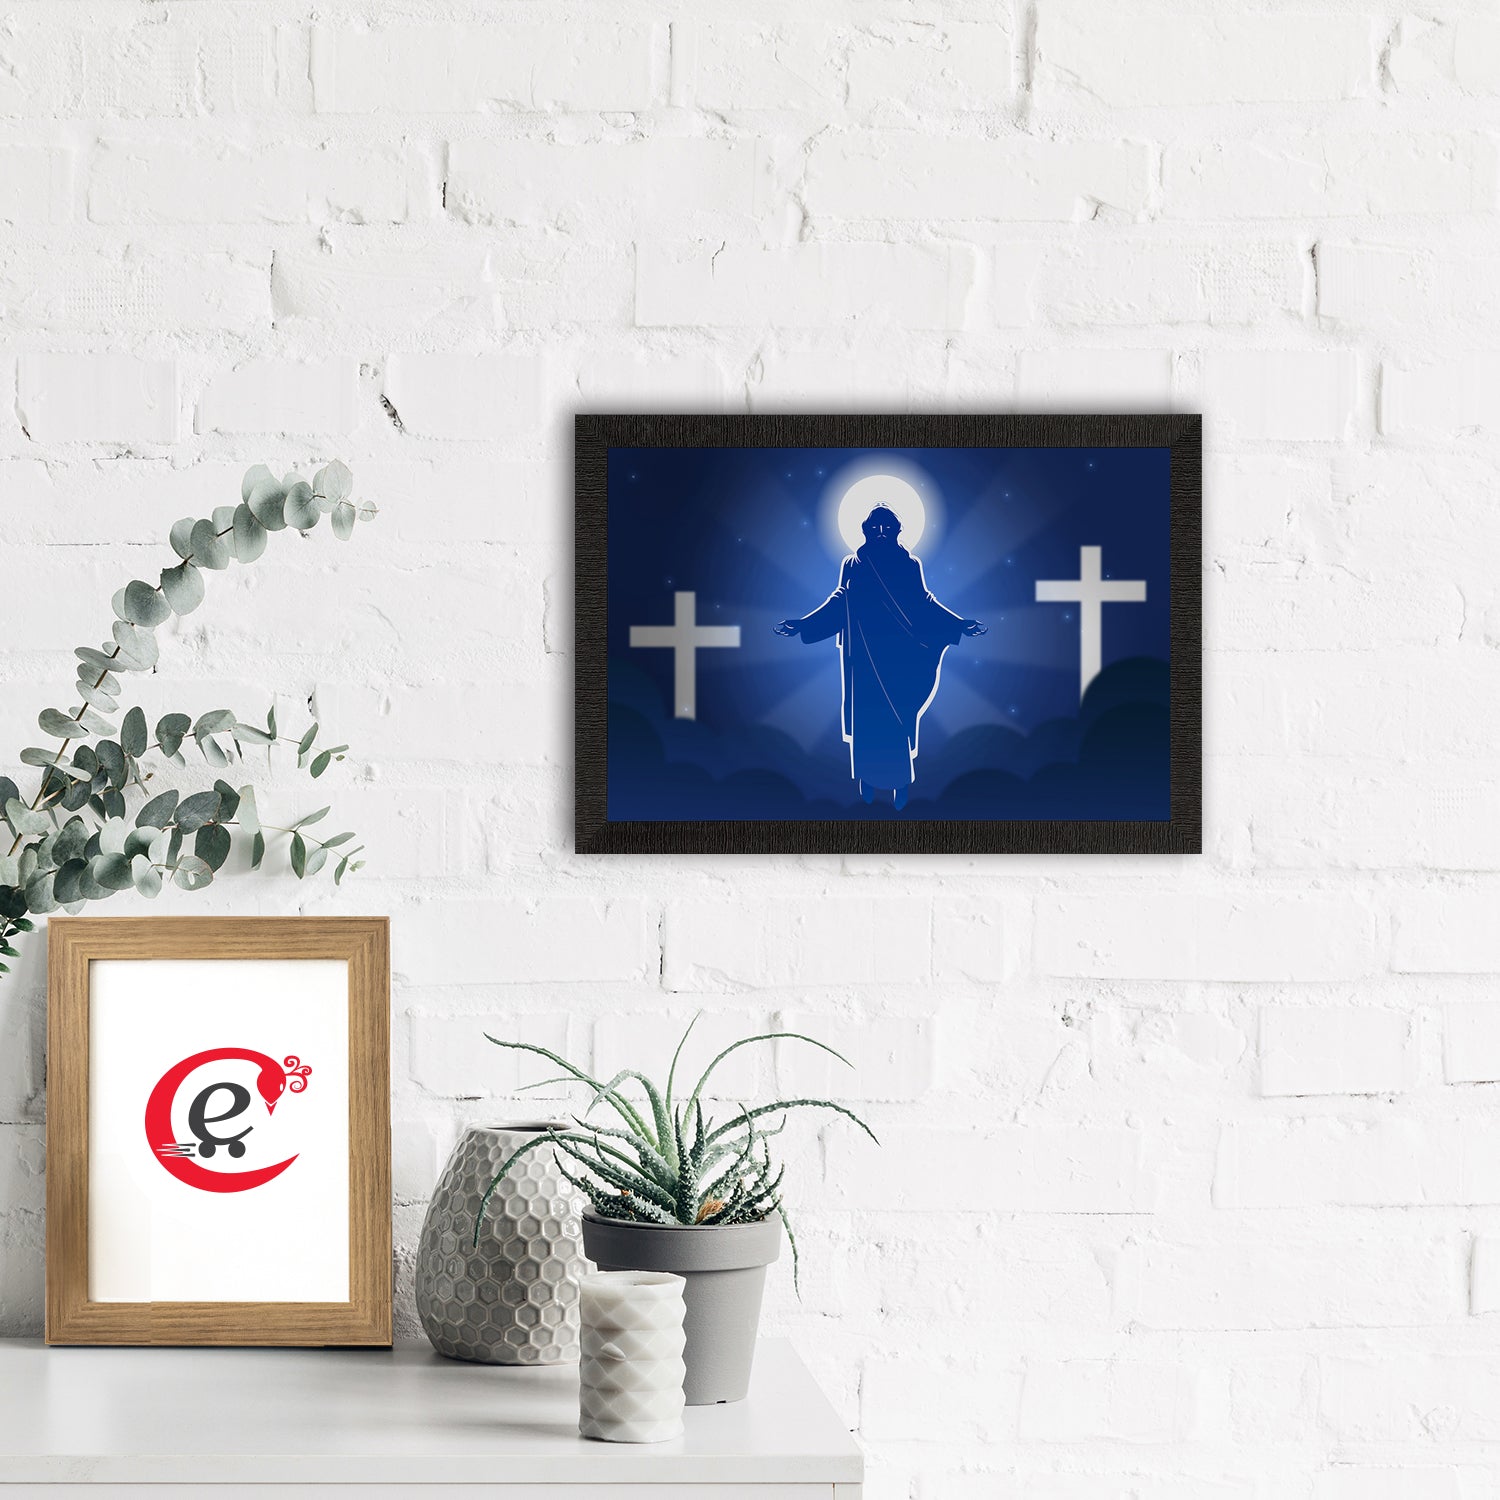 Jesus Christ Painting Digital Printed Religious Wall Art 1